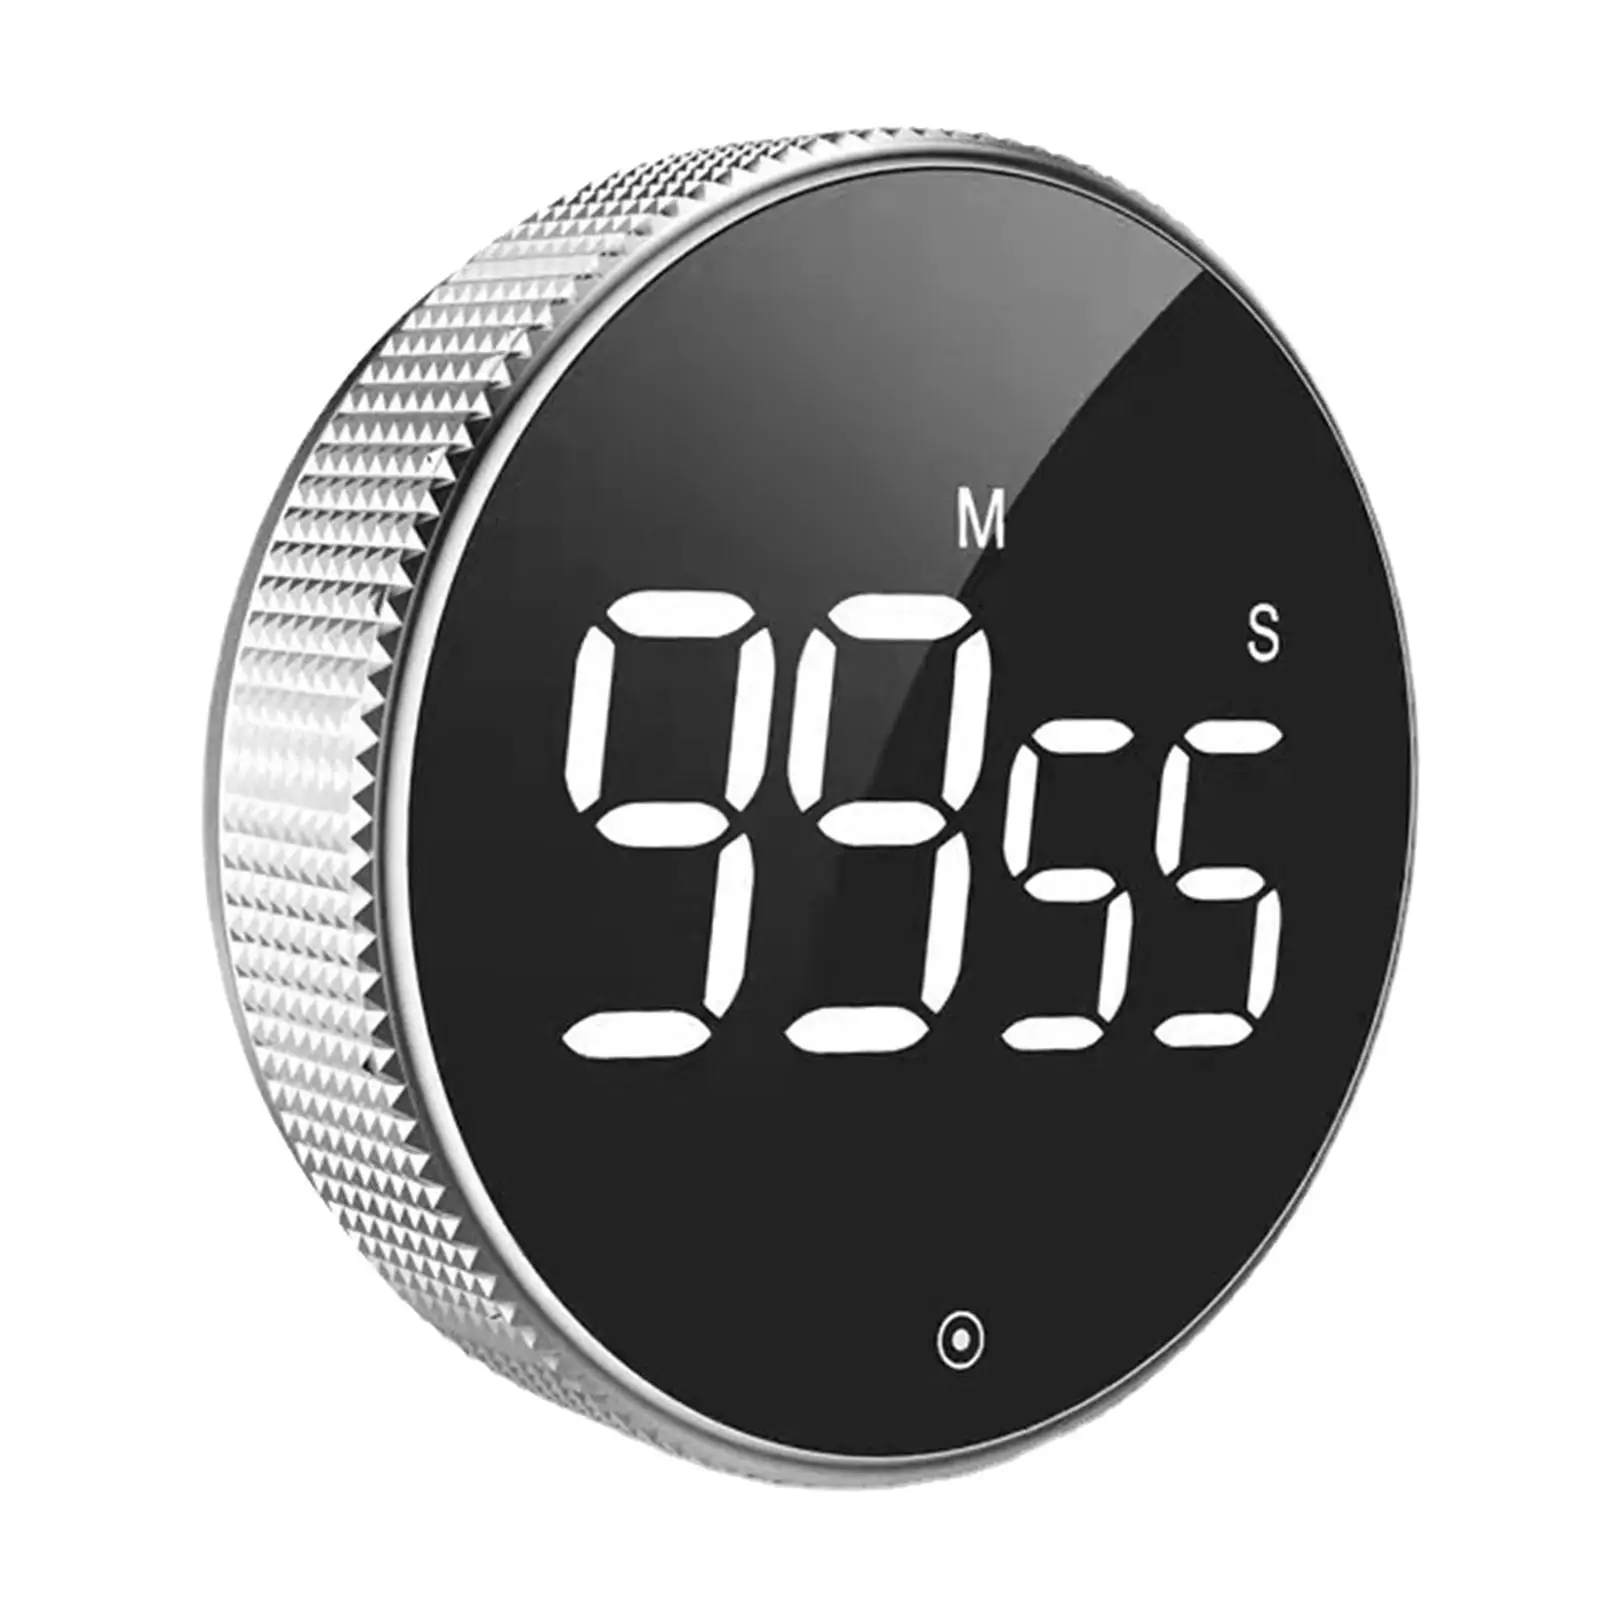 LED Digital Kitchen Timer Home Cooking Timer Count-Down Up Clock Loud Alarm